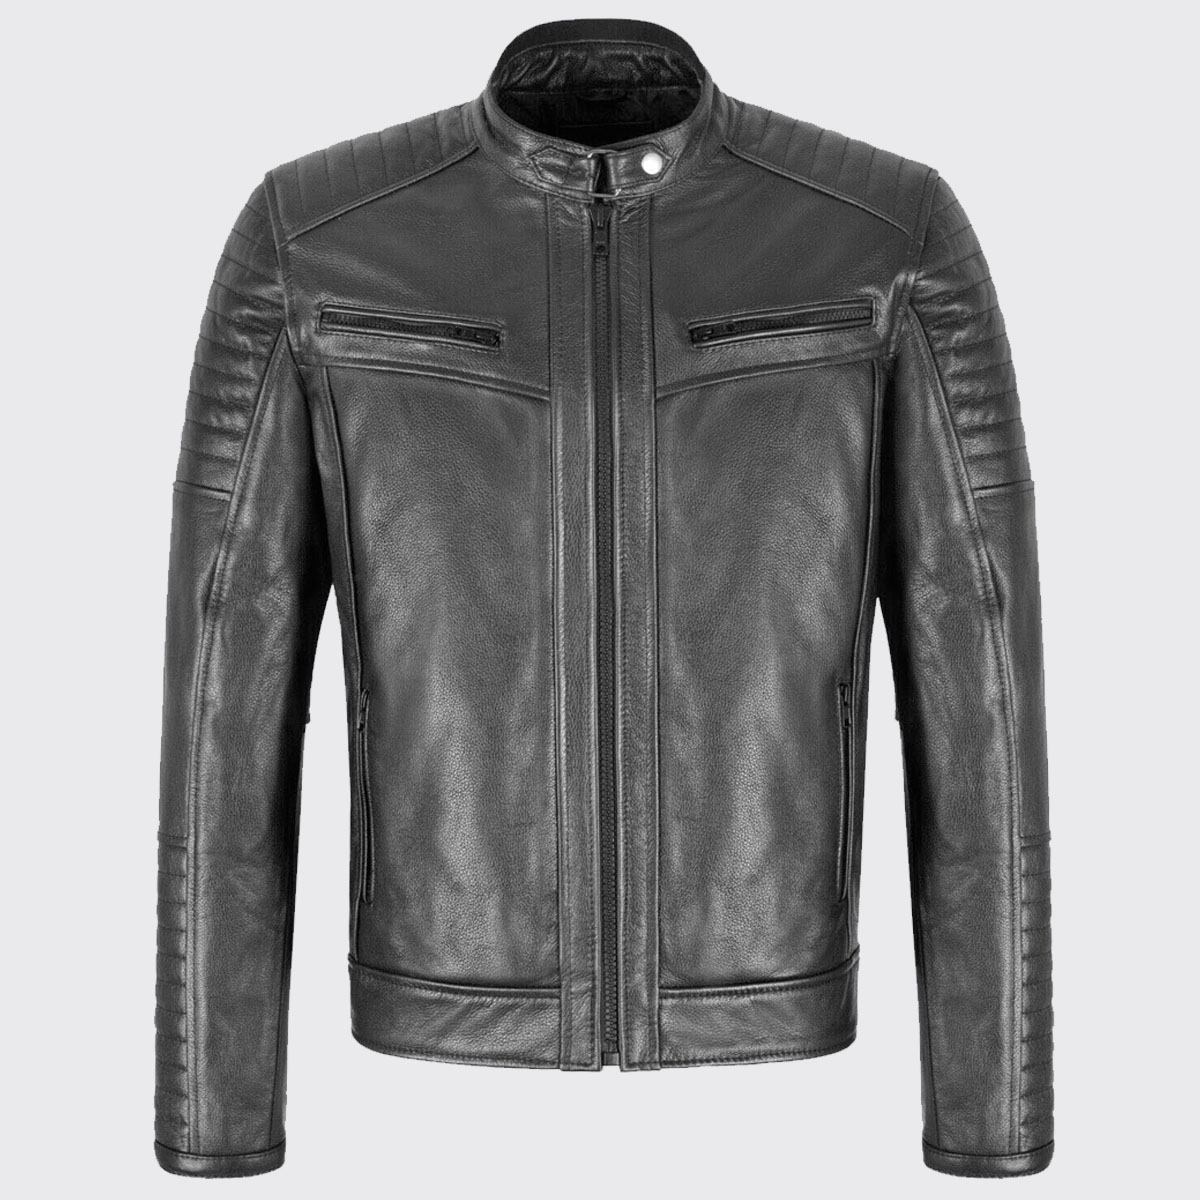 Elegant Black Leather Moto Jacket - The Vintage Leather